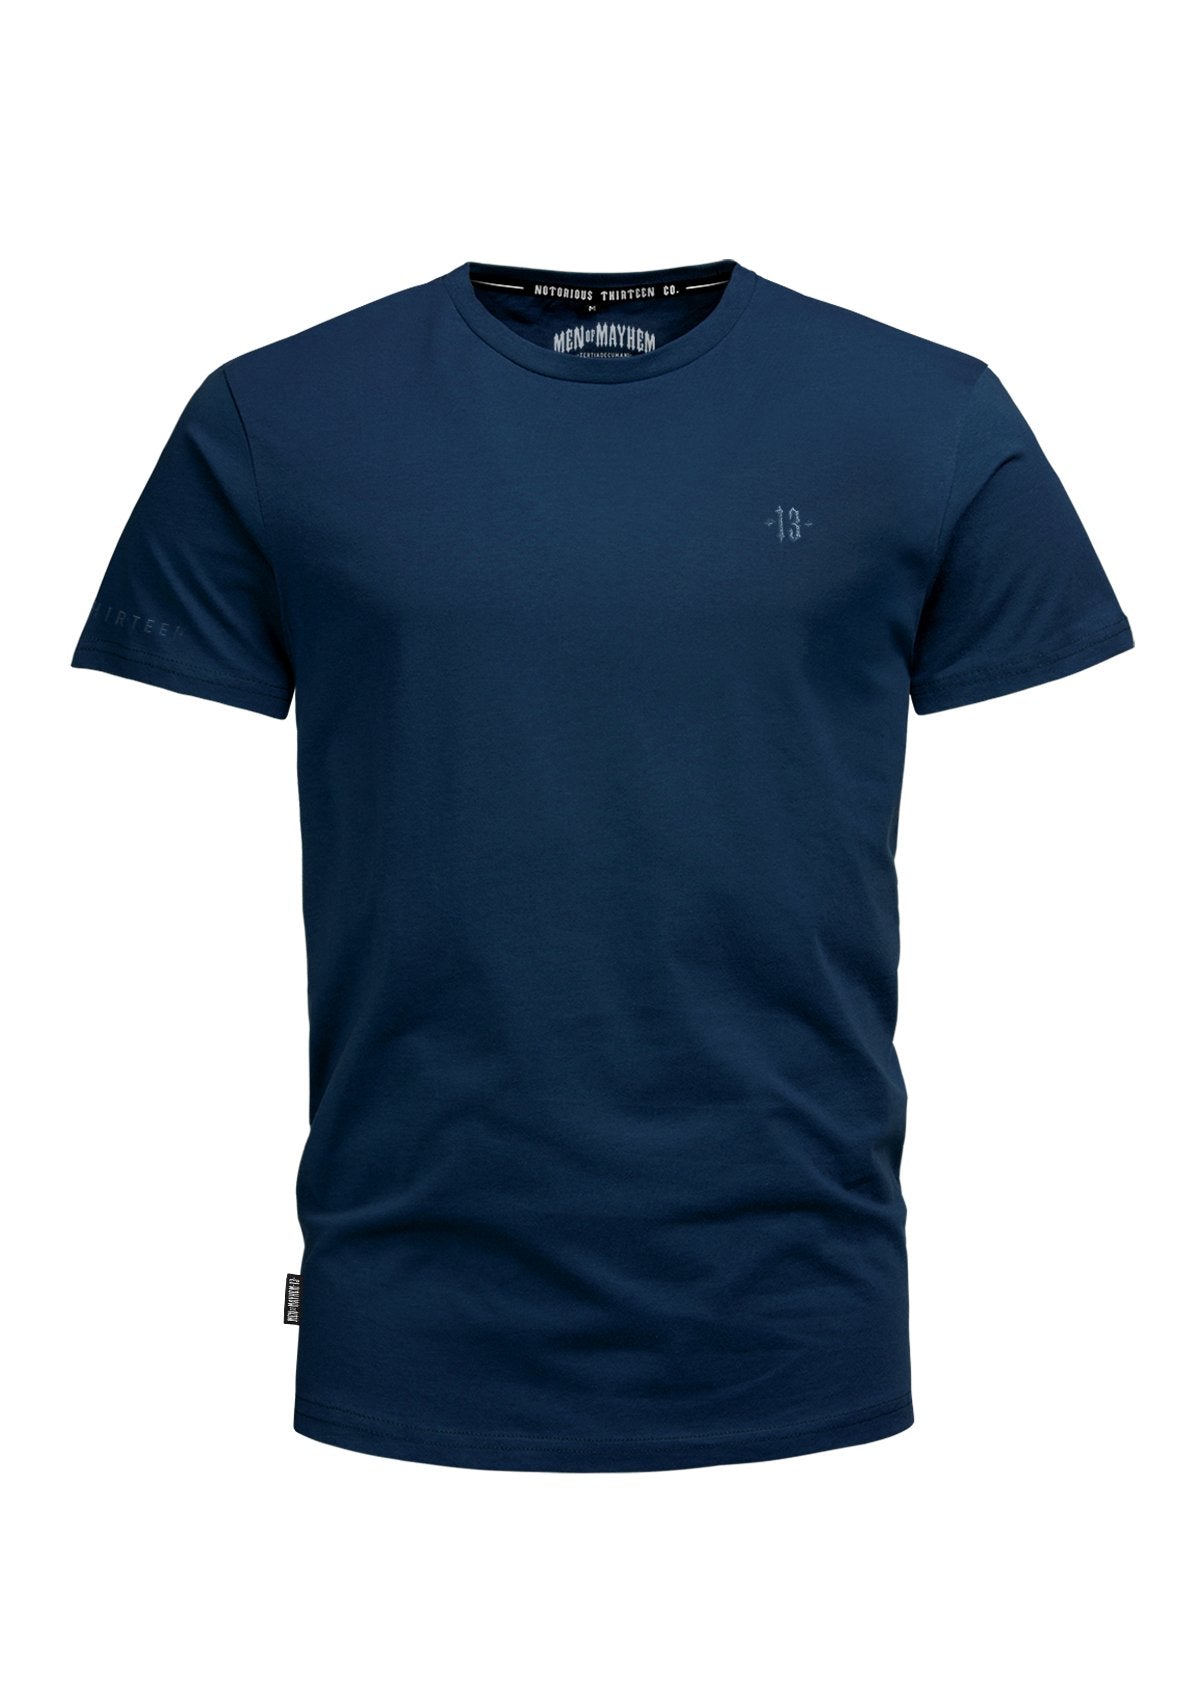 T-Shirt Original N/N - MEN OF MAYHEM - ALAIKO-EXCHANGES-MM-M-1010-OG-NN - Blau - blue